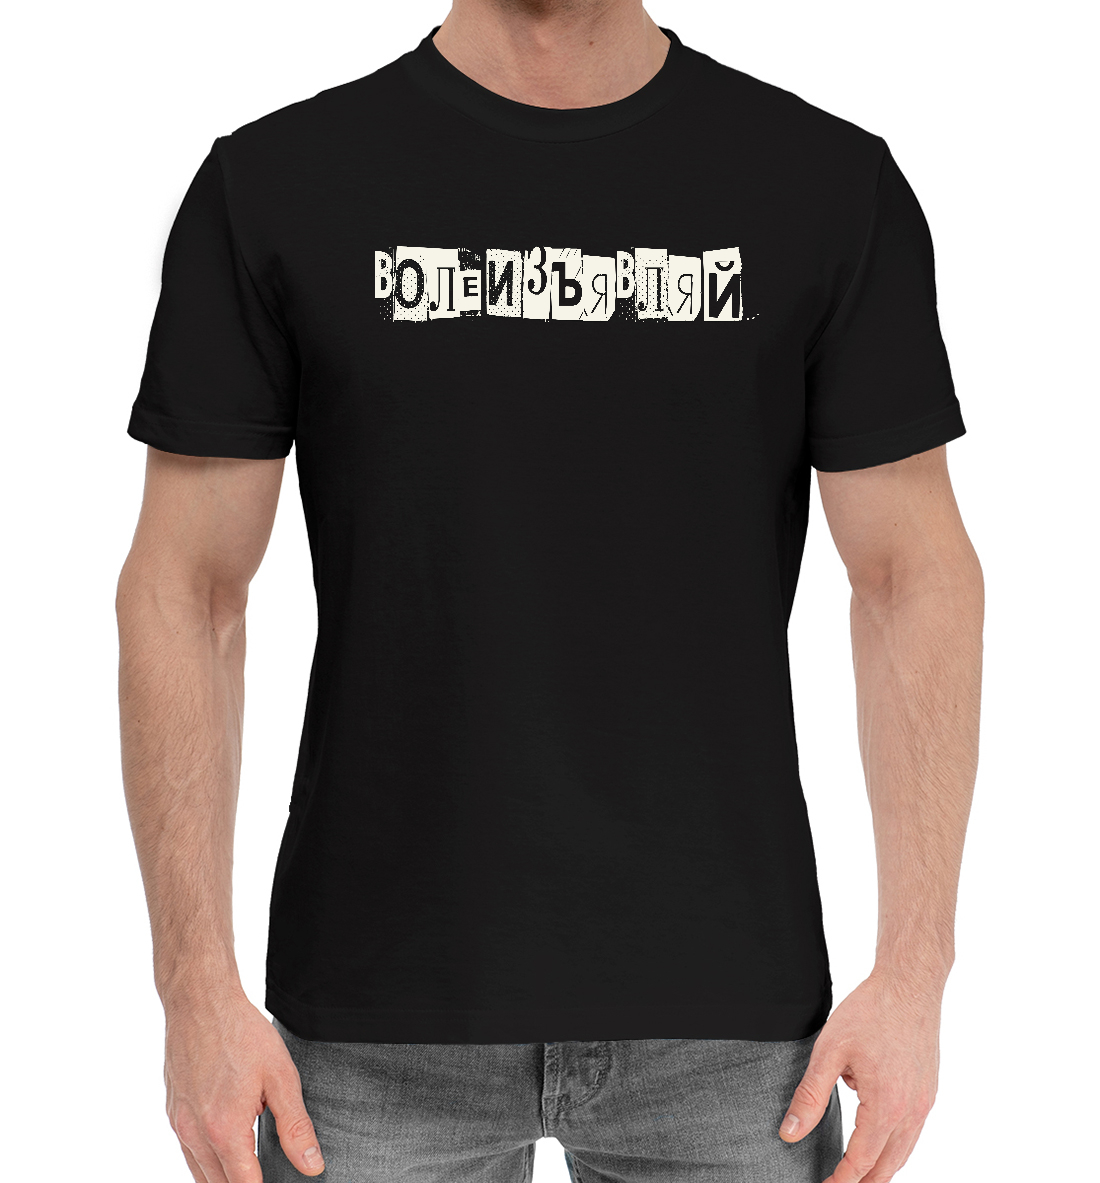 Мужская Хлопковая футболка с надписью Волеизъявляй, артикул NDP-395668-hfu-2mp